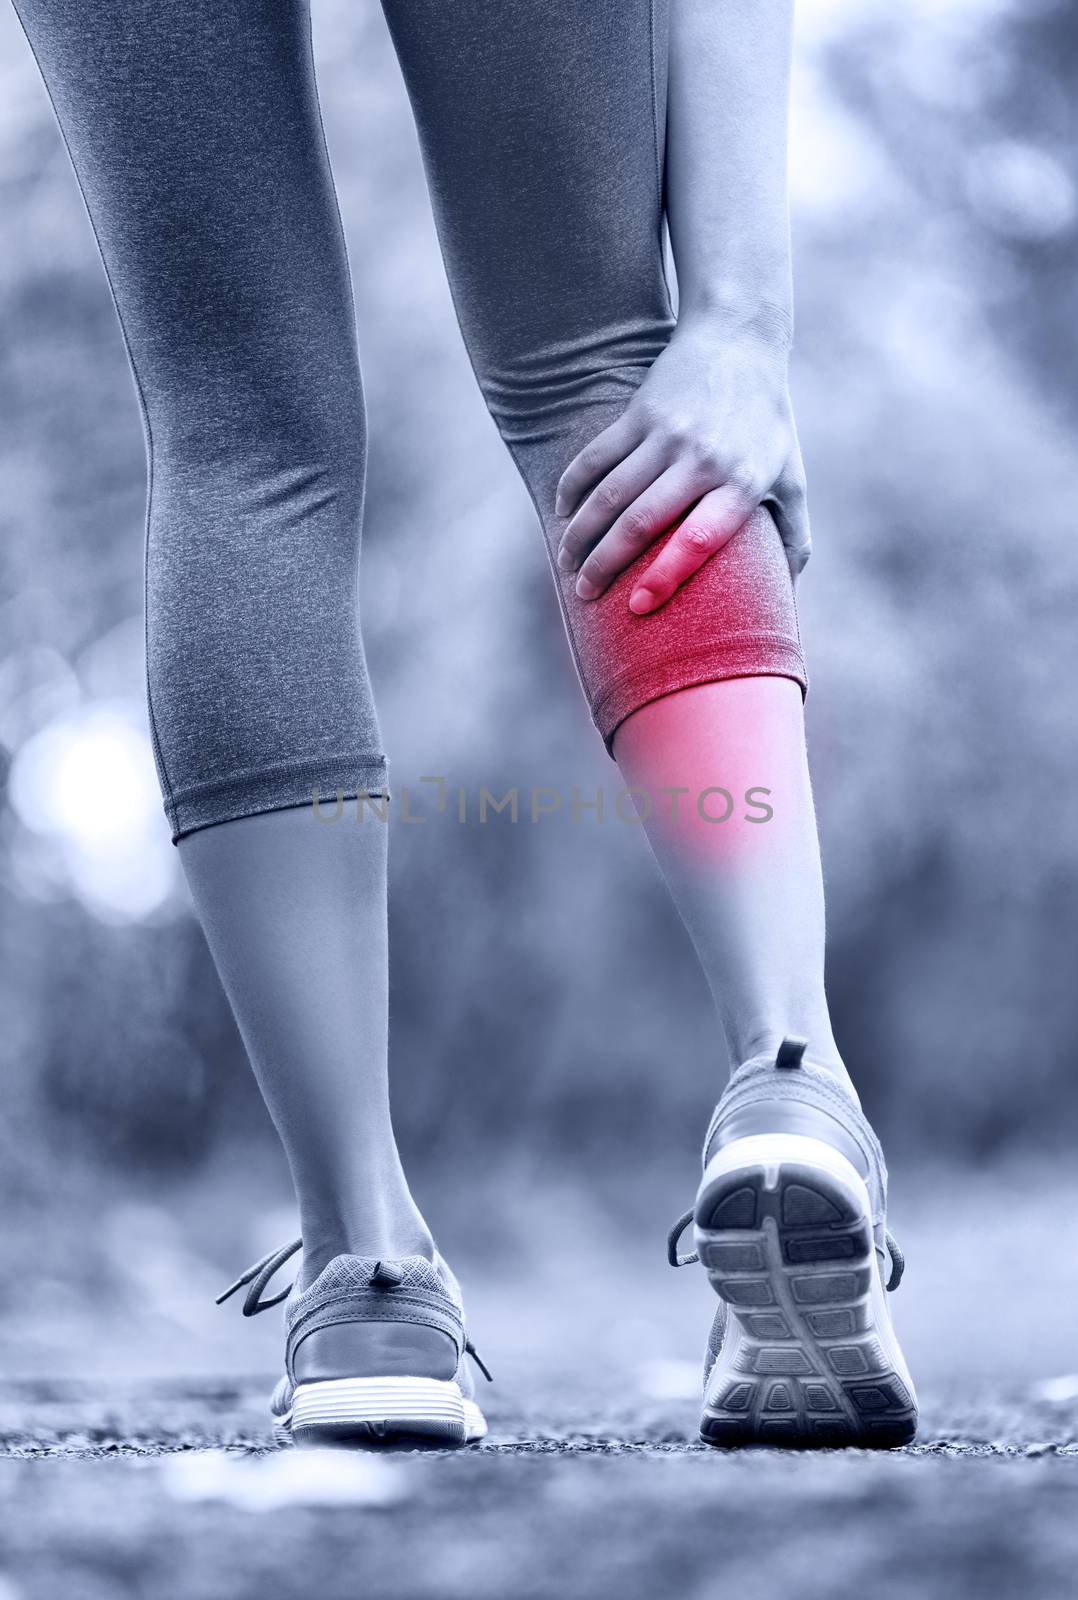 Muscle injury - woman running clutching calf muscle by Maridav